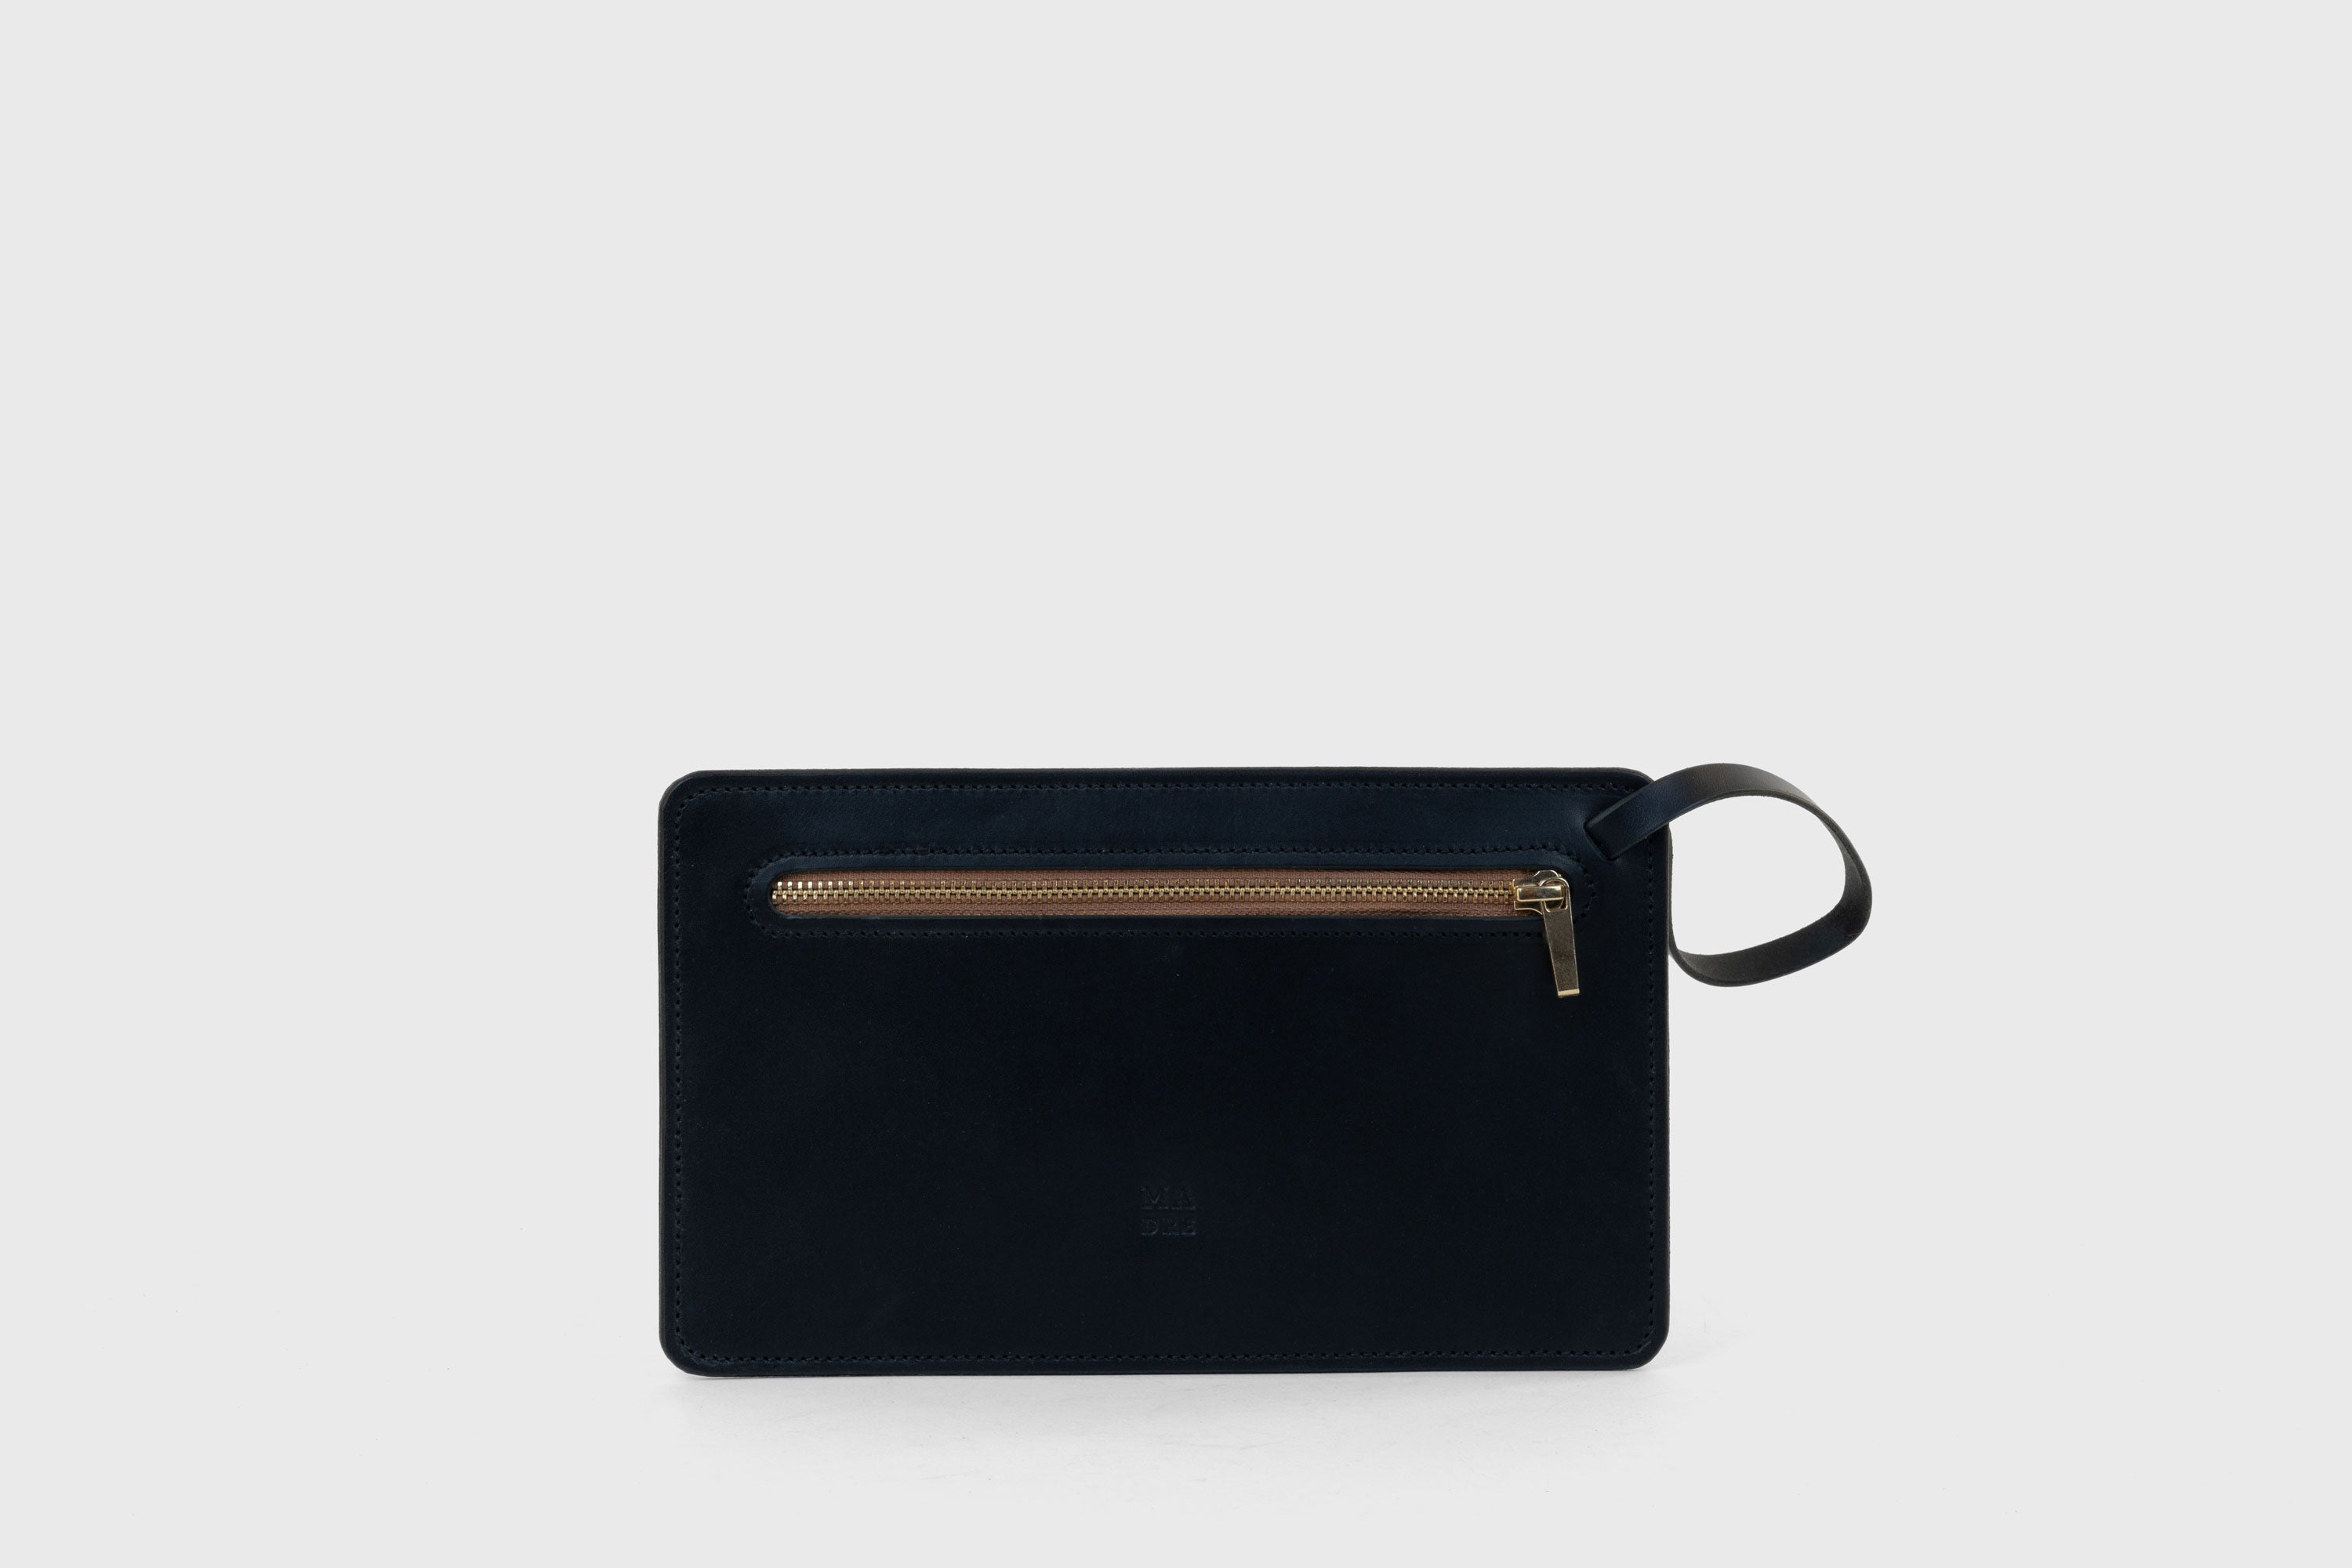 Clutch Flat Leather Black Bag Slim Wrist Band Zipper Minimalistic Premium Handmade Design Atelier Madre Manuel Dreesmann Barcelona Spain